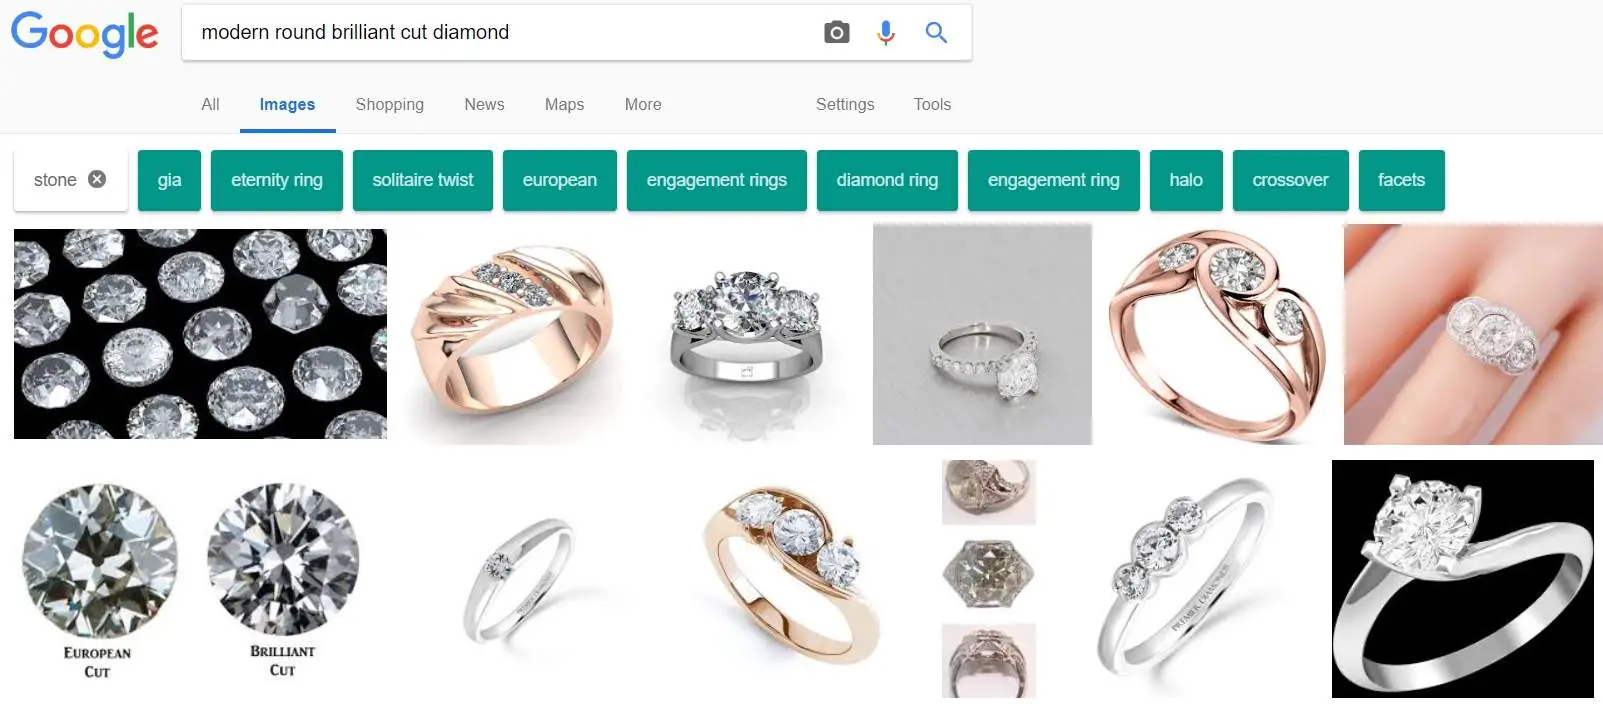 modern round brilliant cut diamond - Google Search